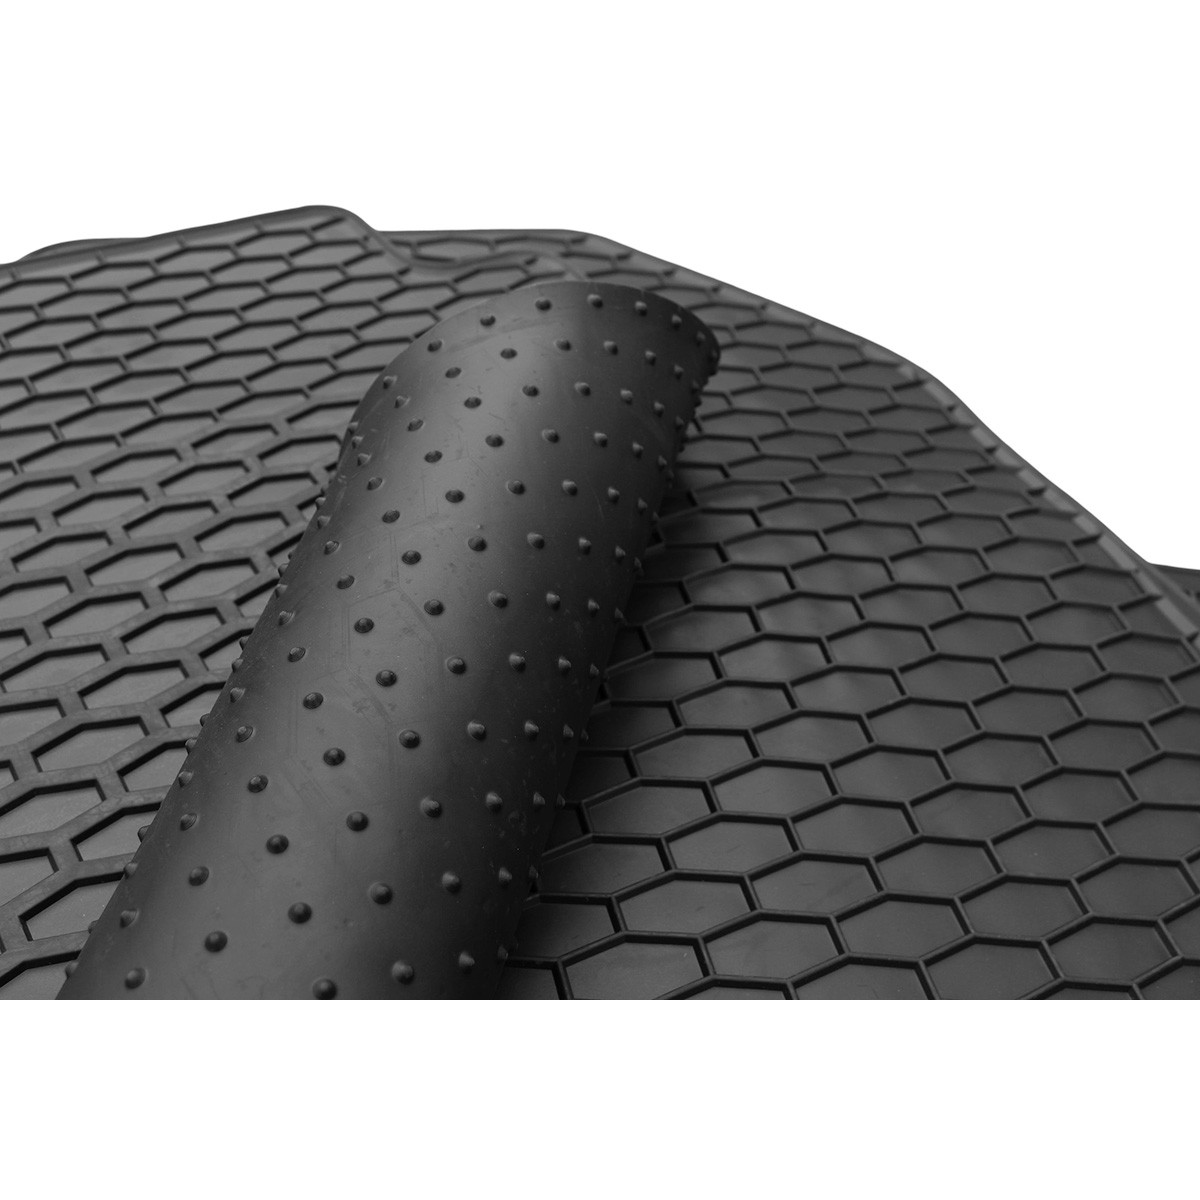 Rubber mats VOLKSWAGEN Jetta 2005-2011 (, oval clips) / P223308 / black